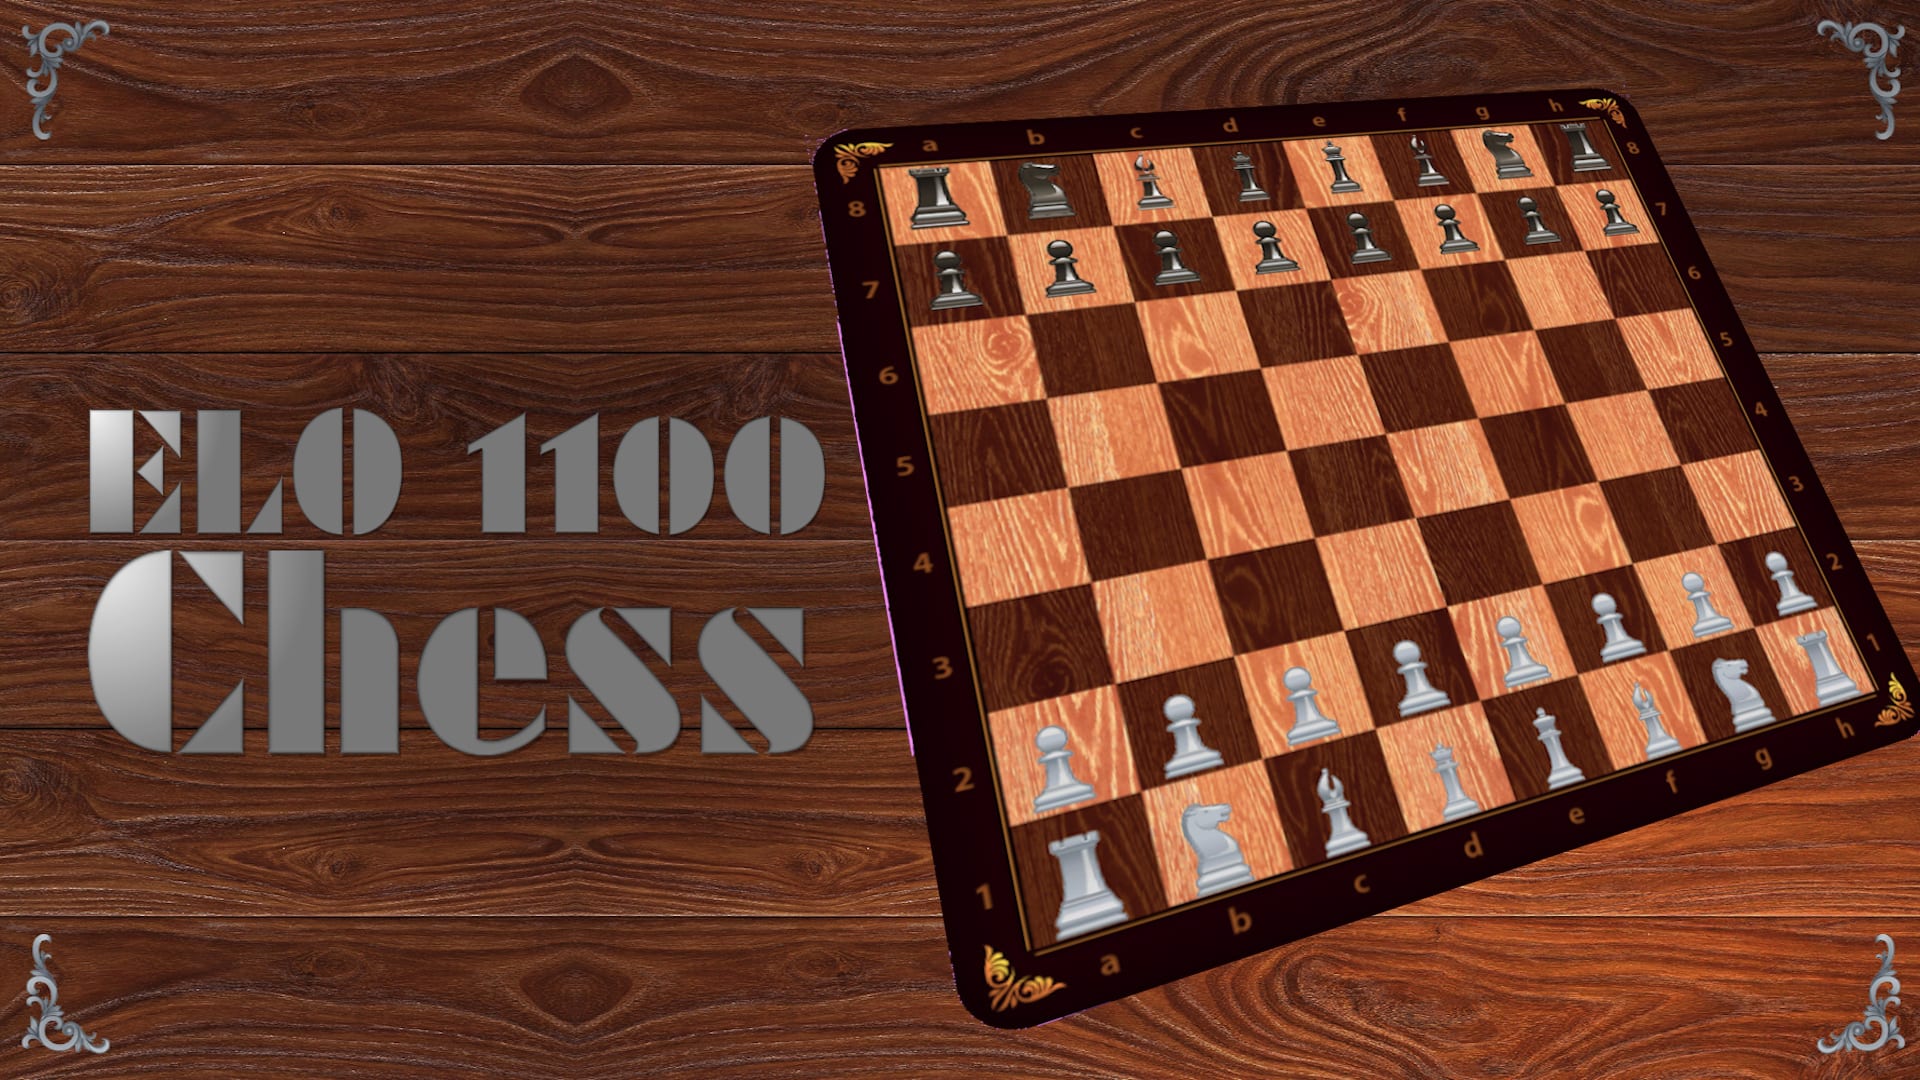 ELO 1100 Chess